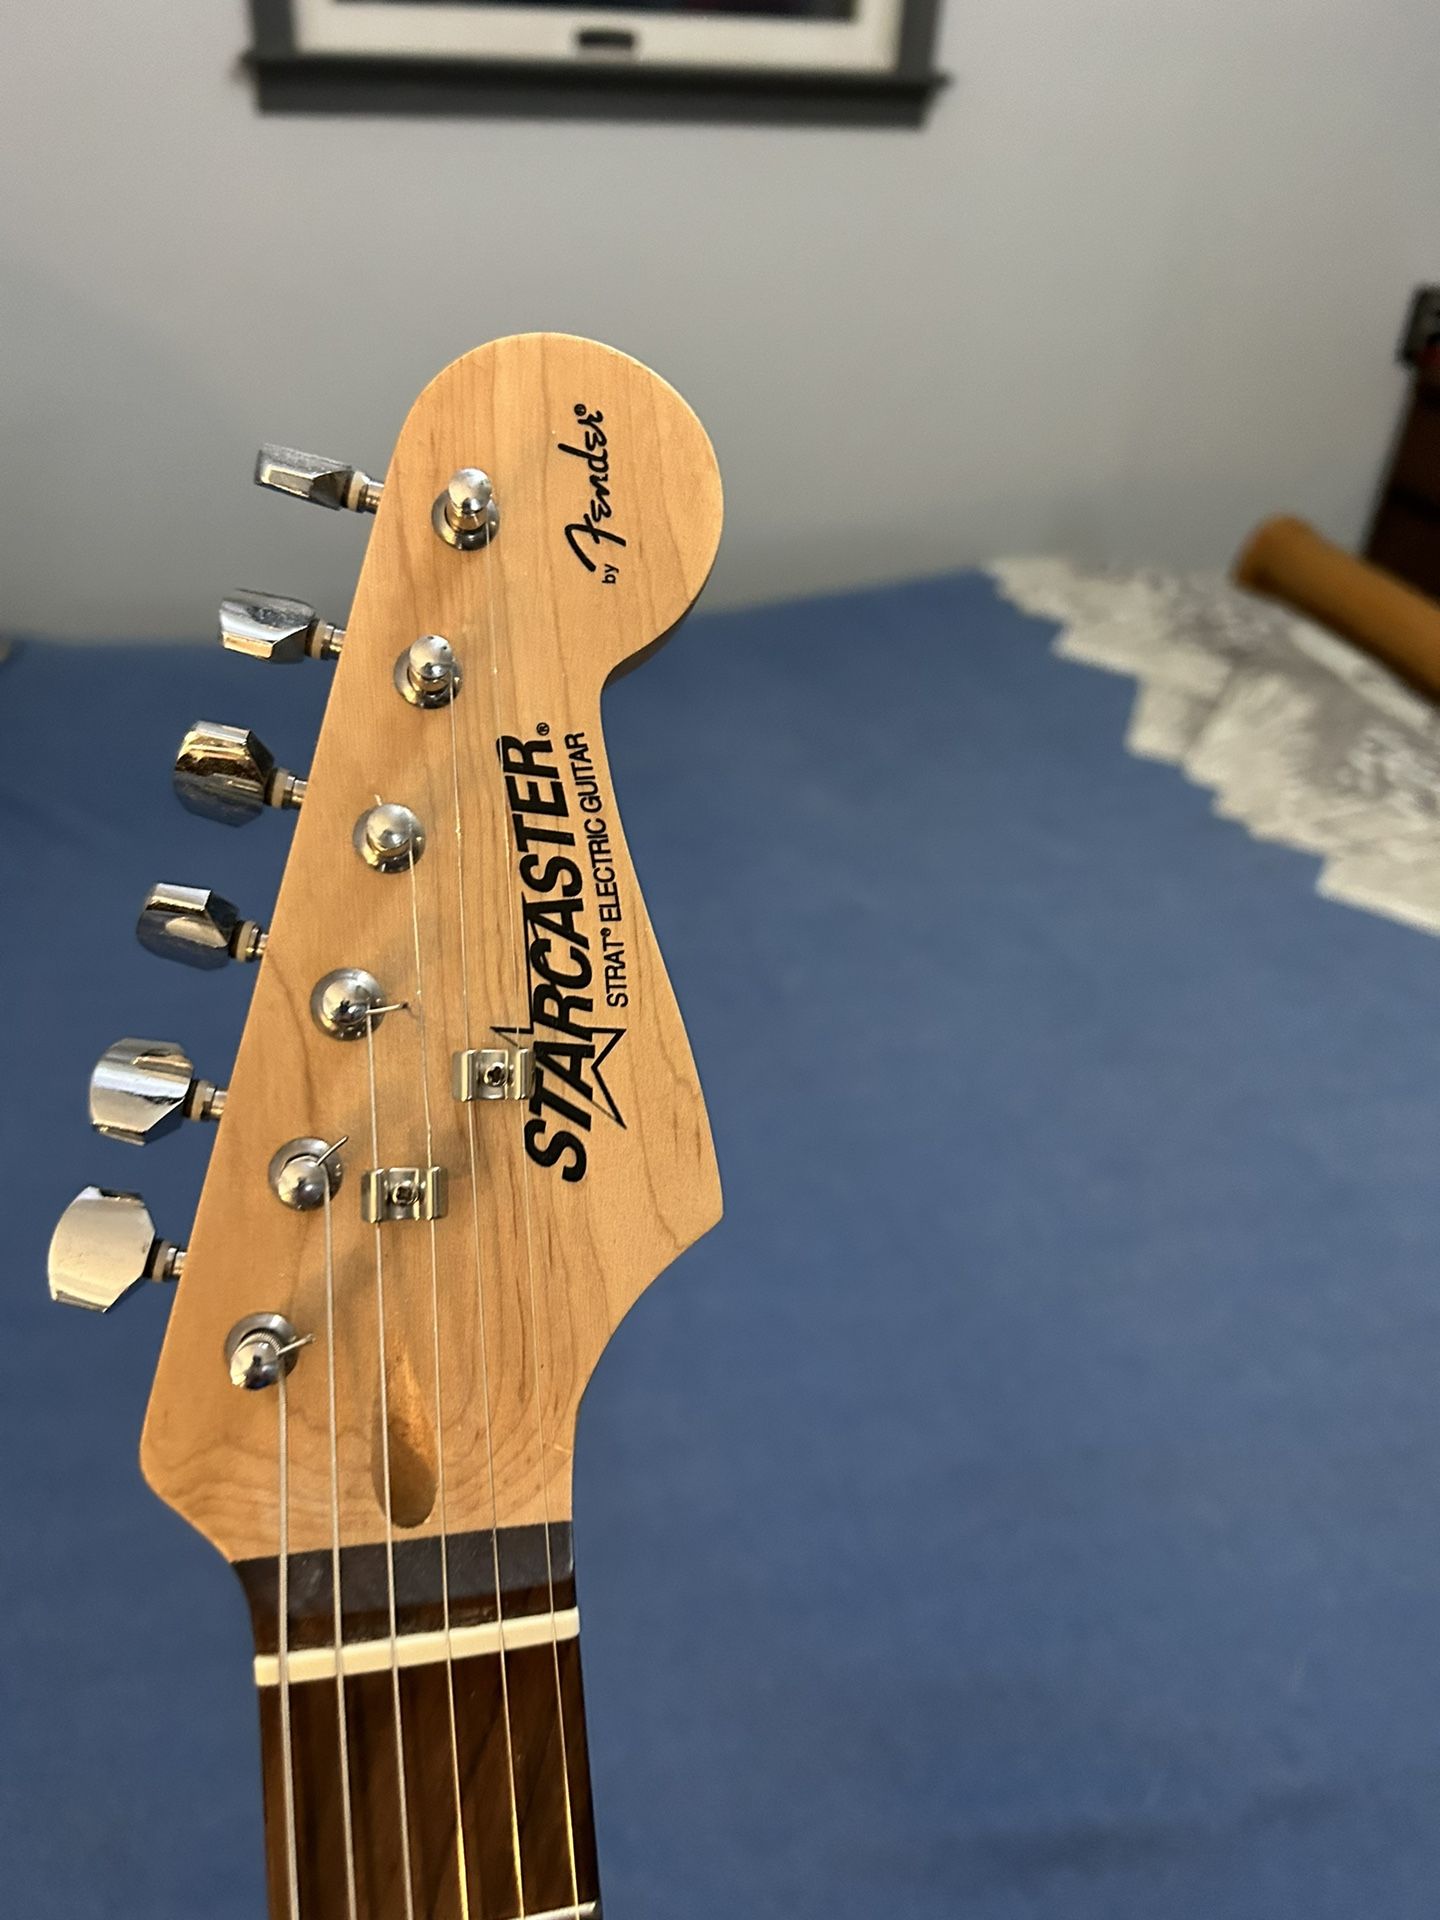 Fender Star Caster, Six String Electric Guitar